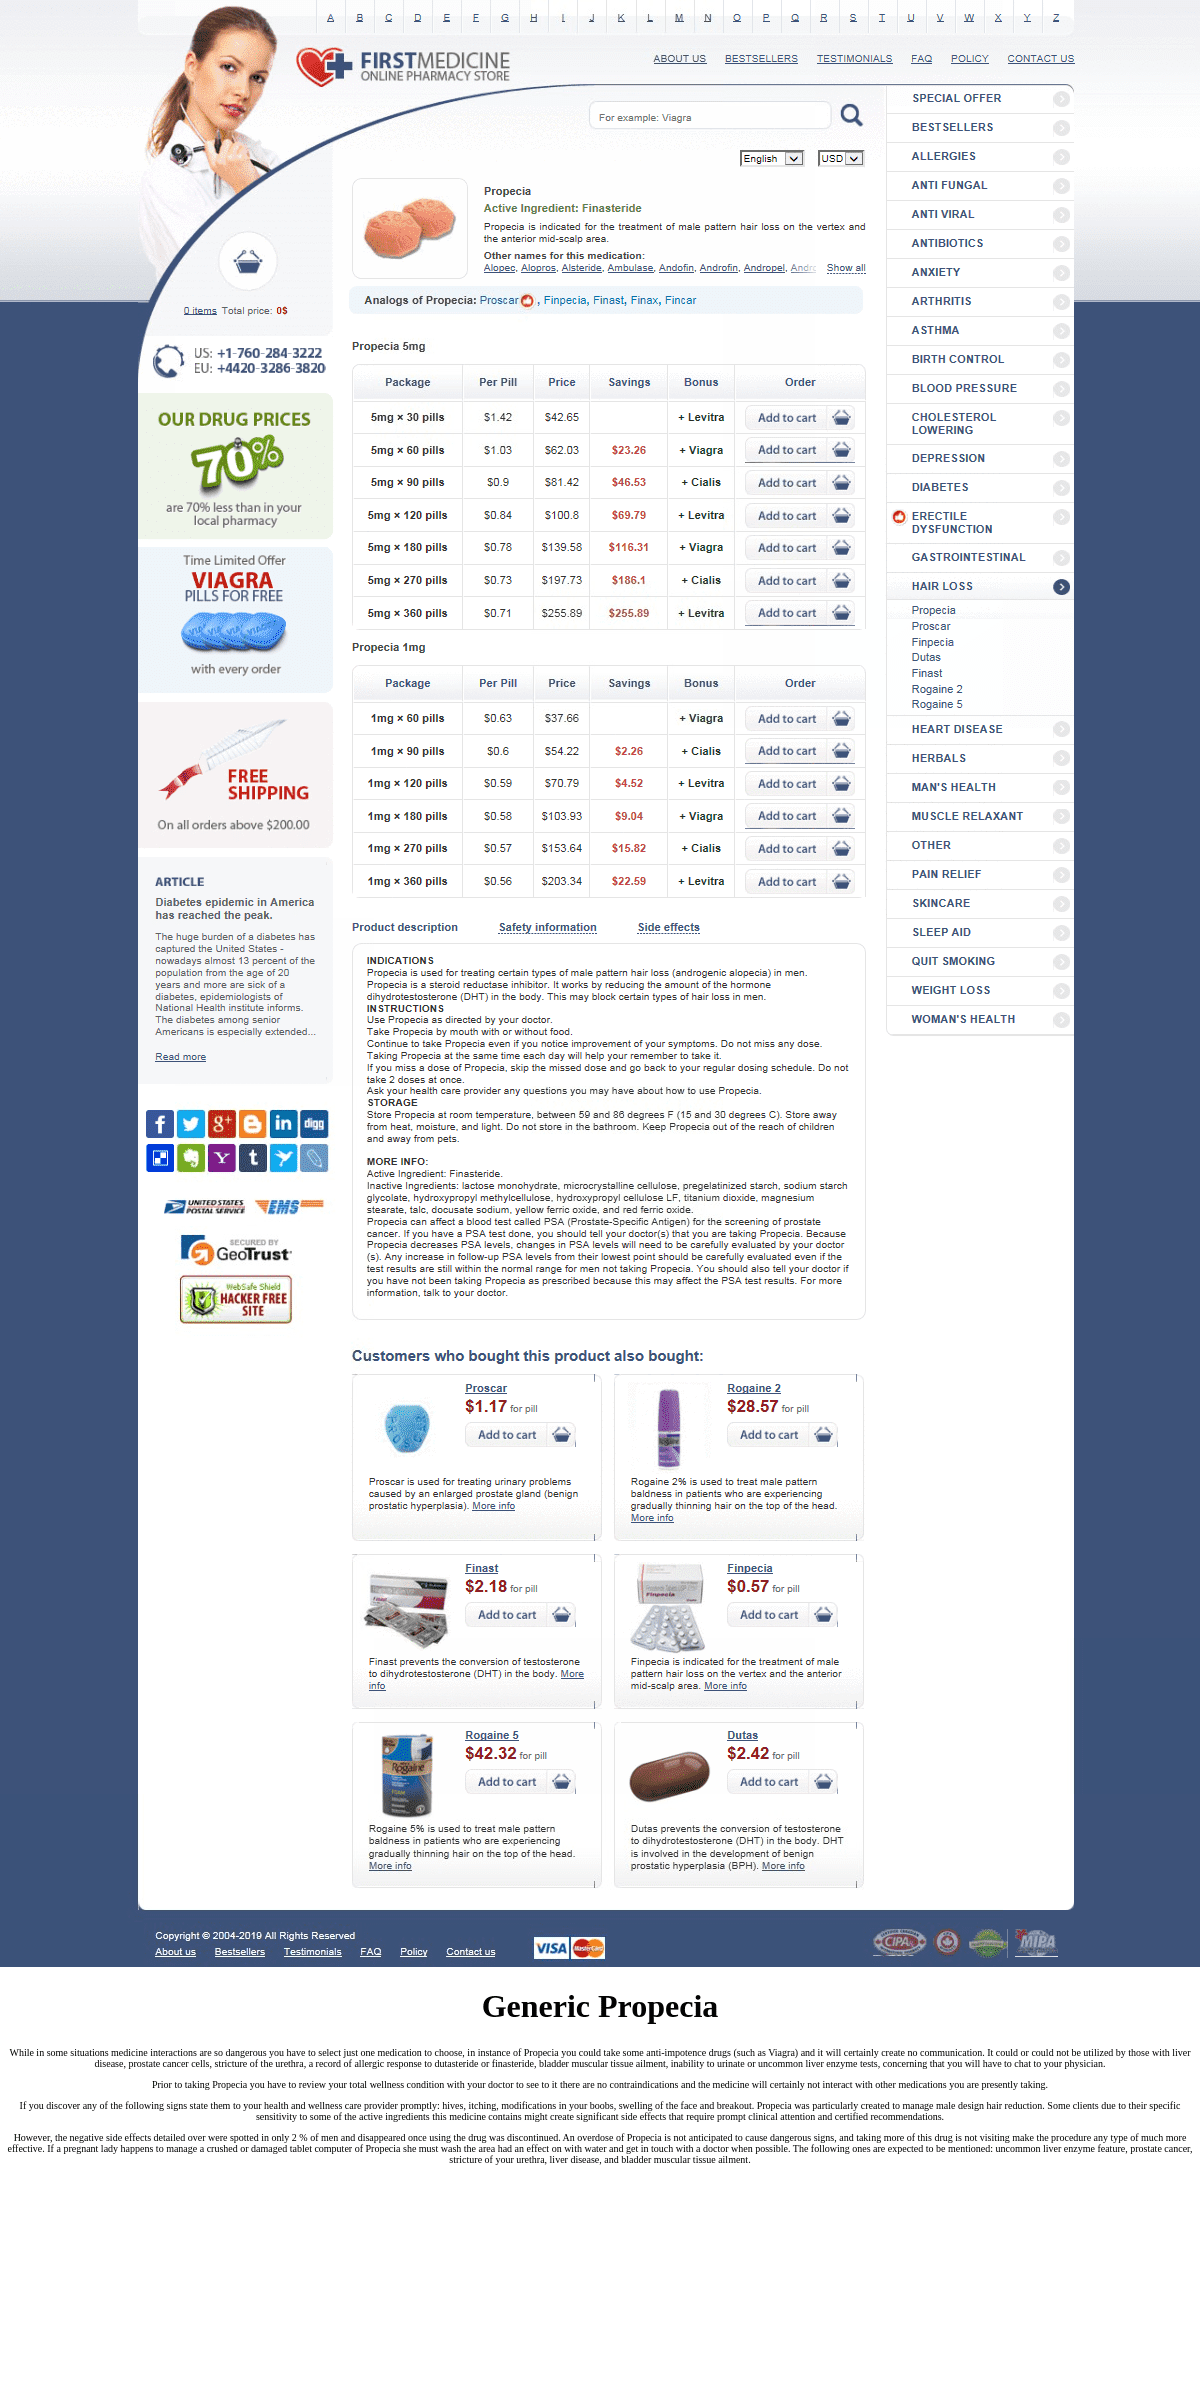 A complete backup of propecia10.com